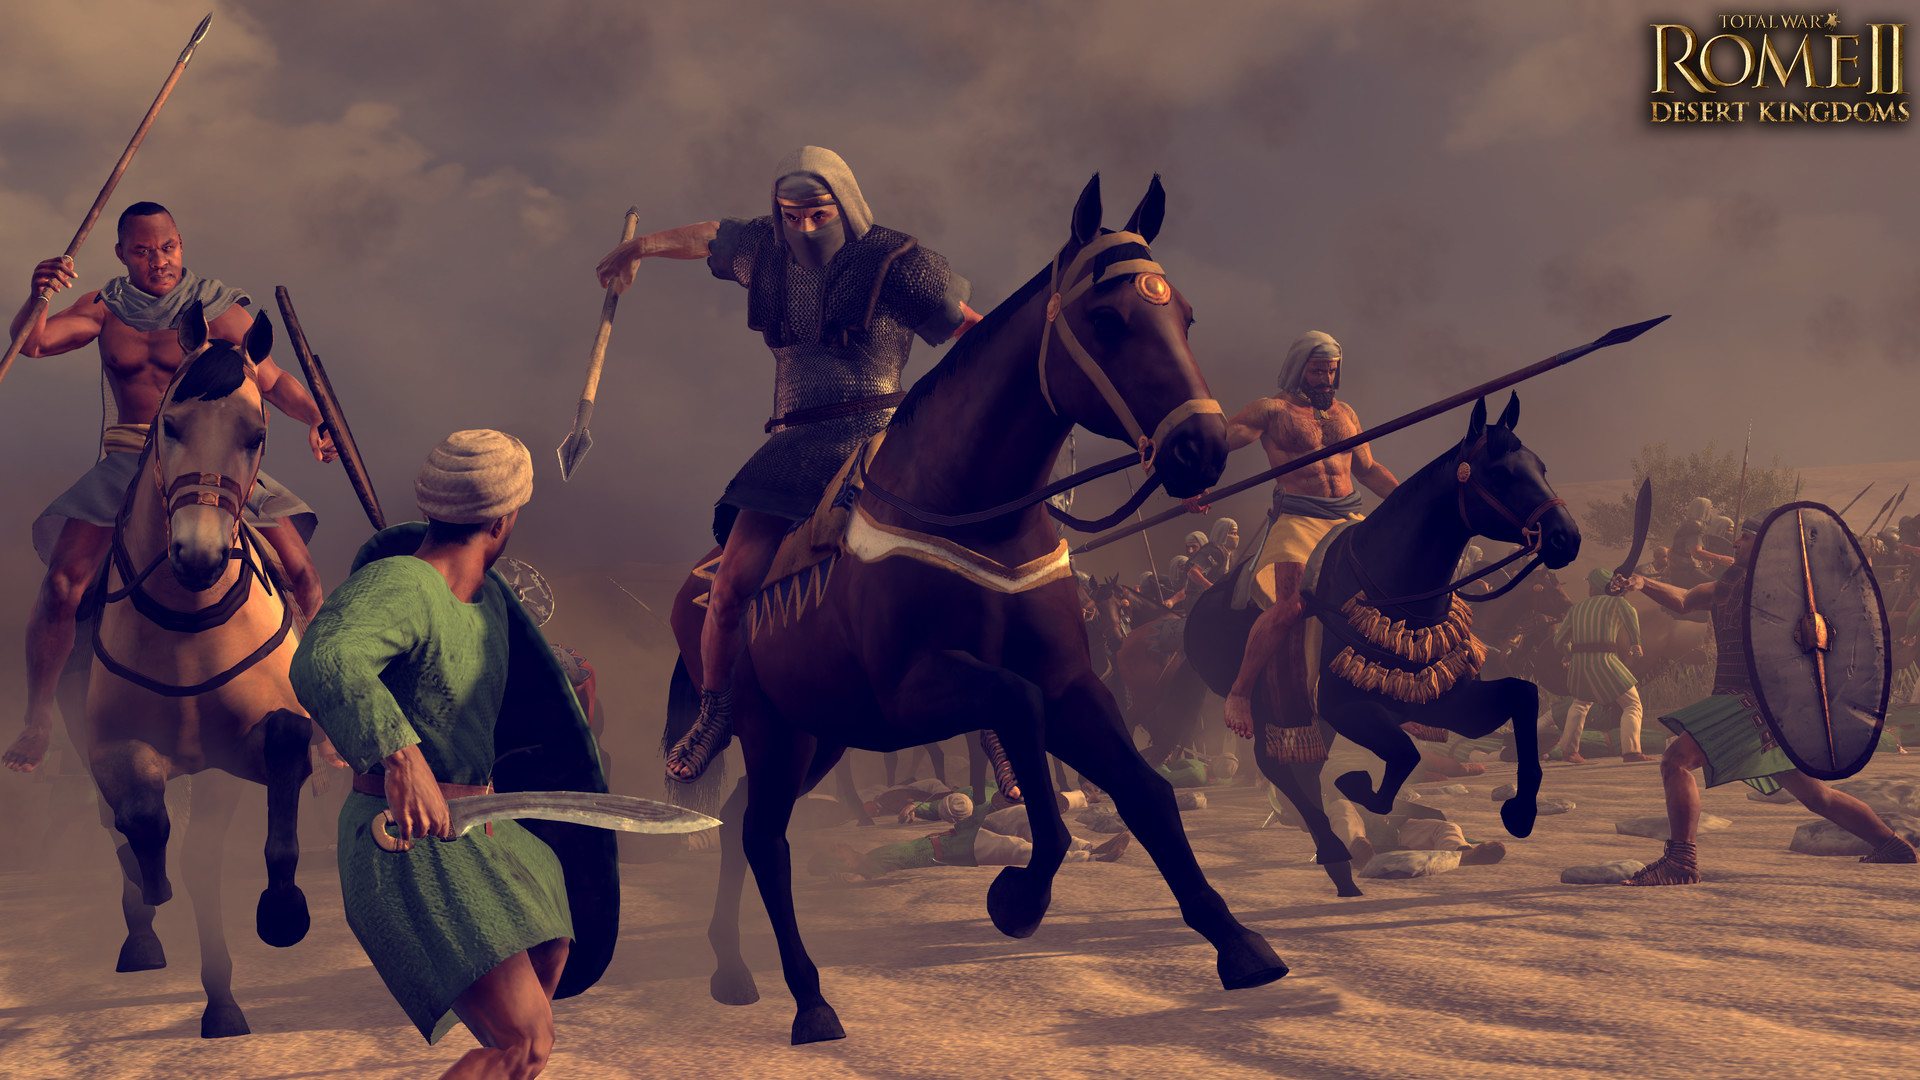 [$ 9.13] Total War: ROME II - Desert Kingdoms Culture Pack DLC Steam CD Key